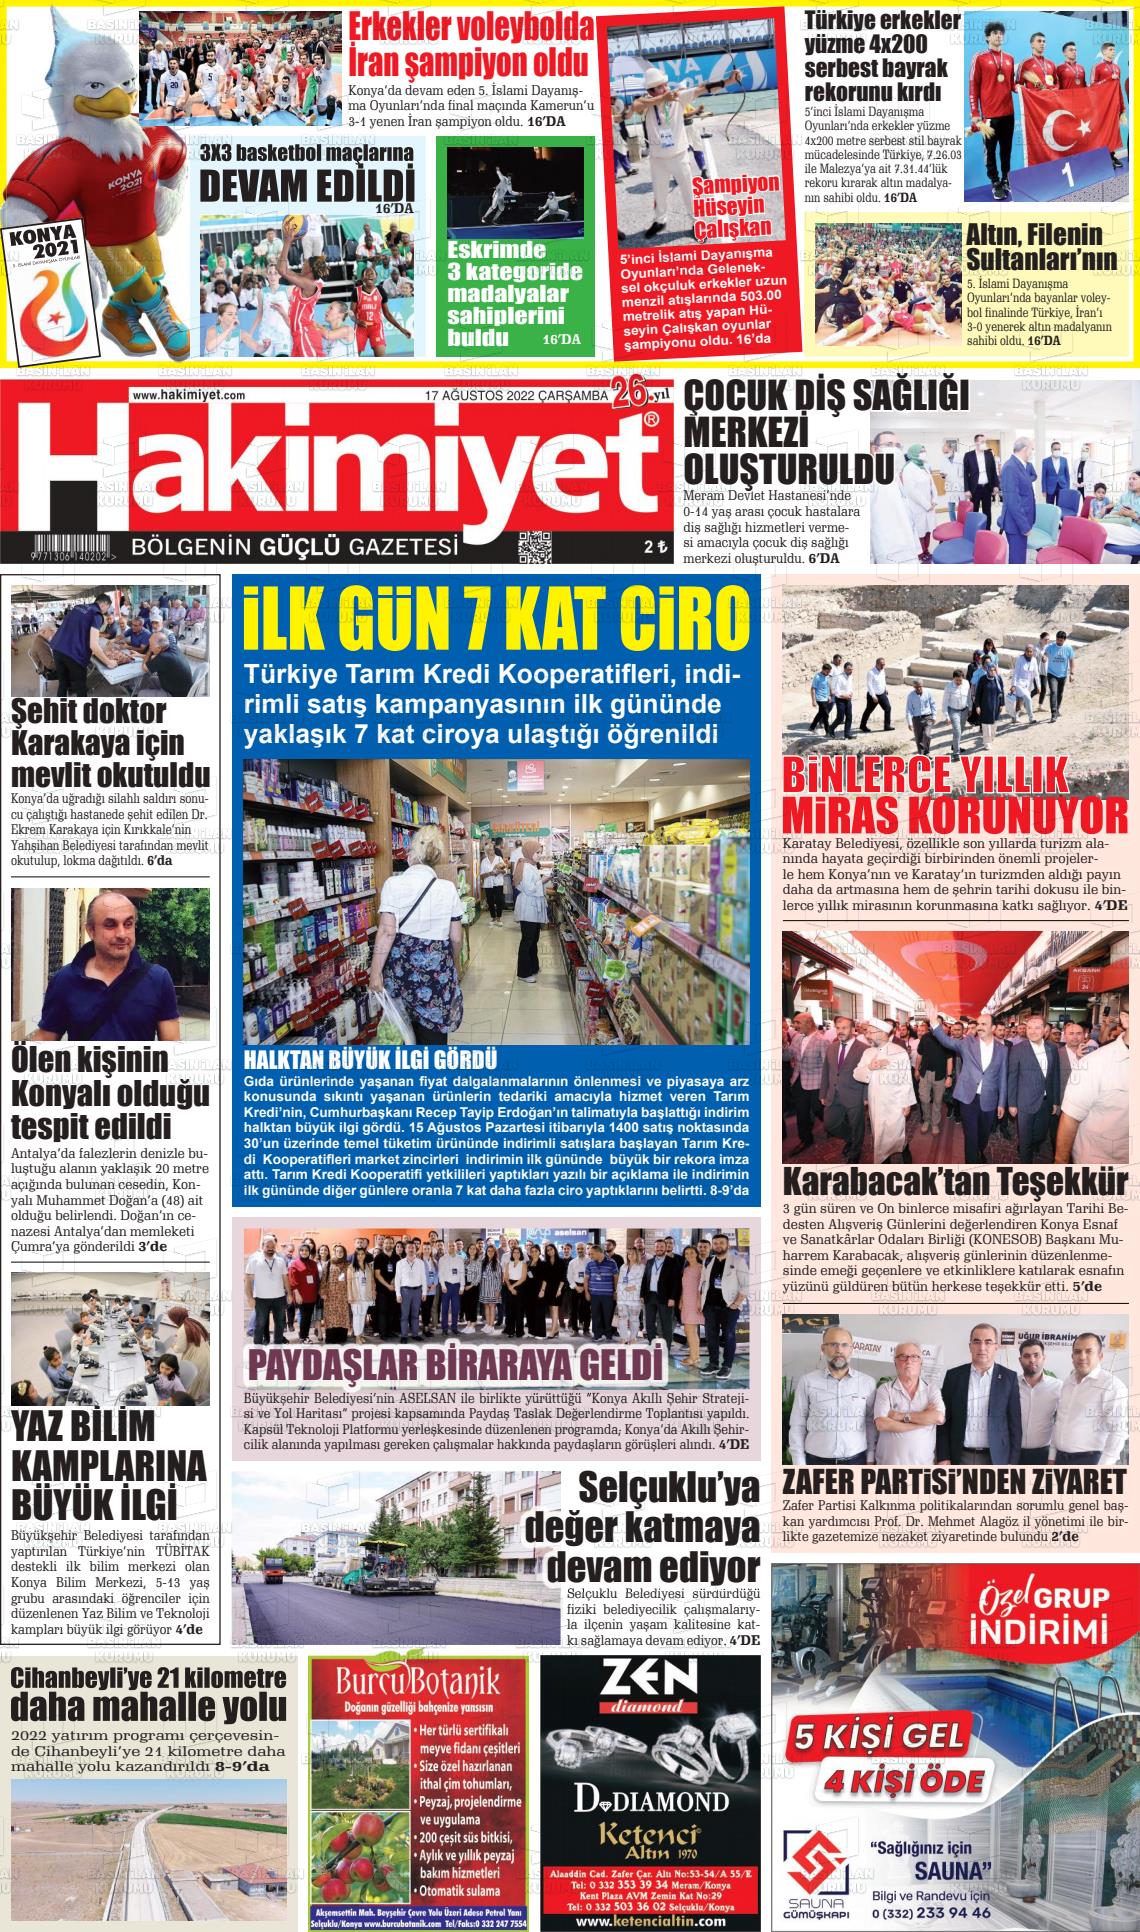 17 Ağustos 2022 Konya Hakimiyet Gazete Manşeti